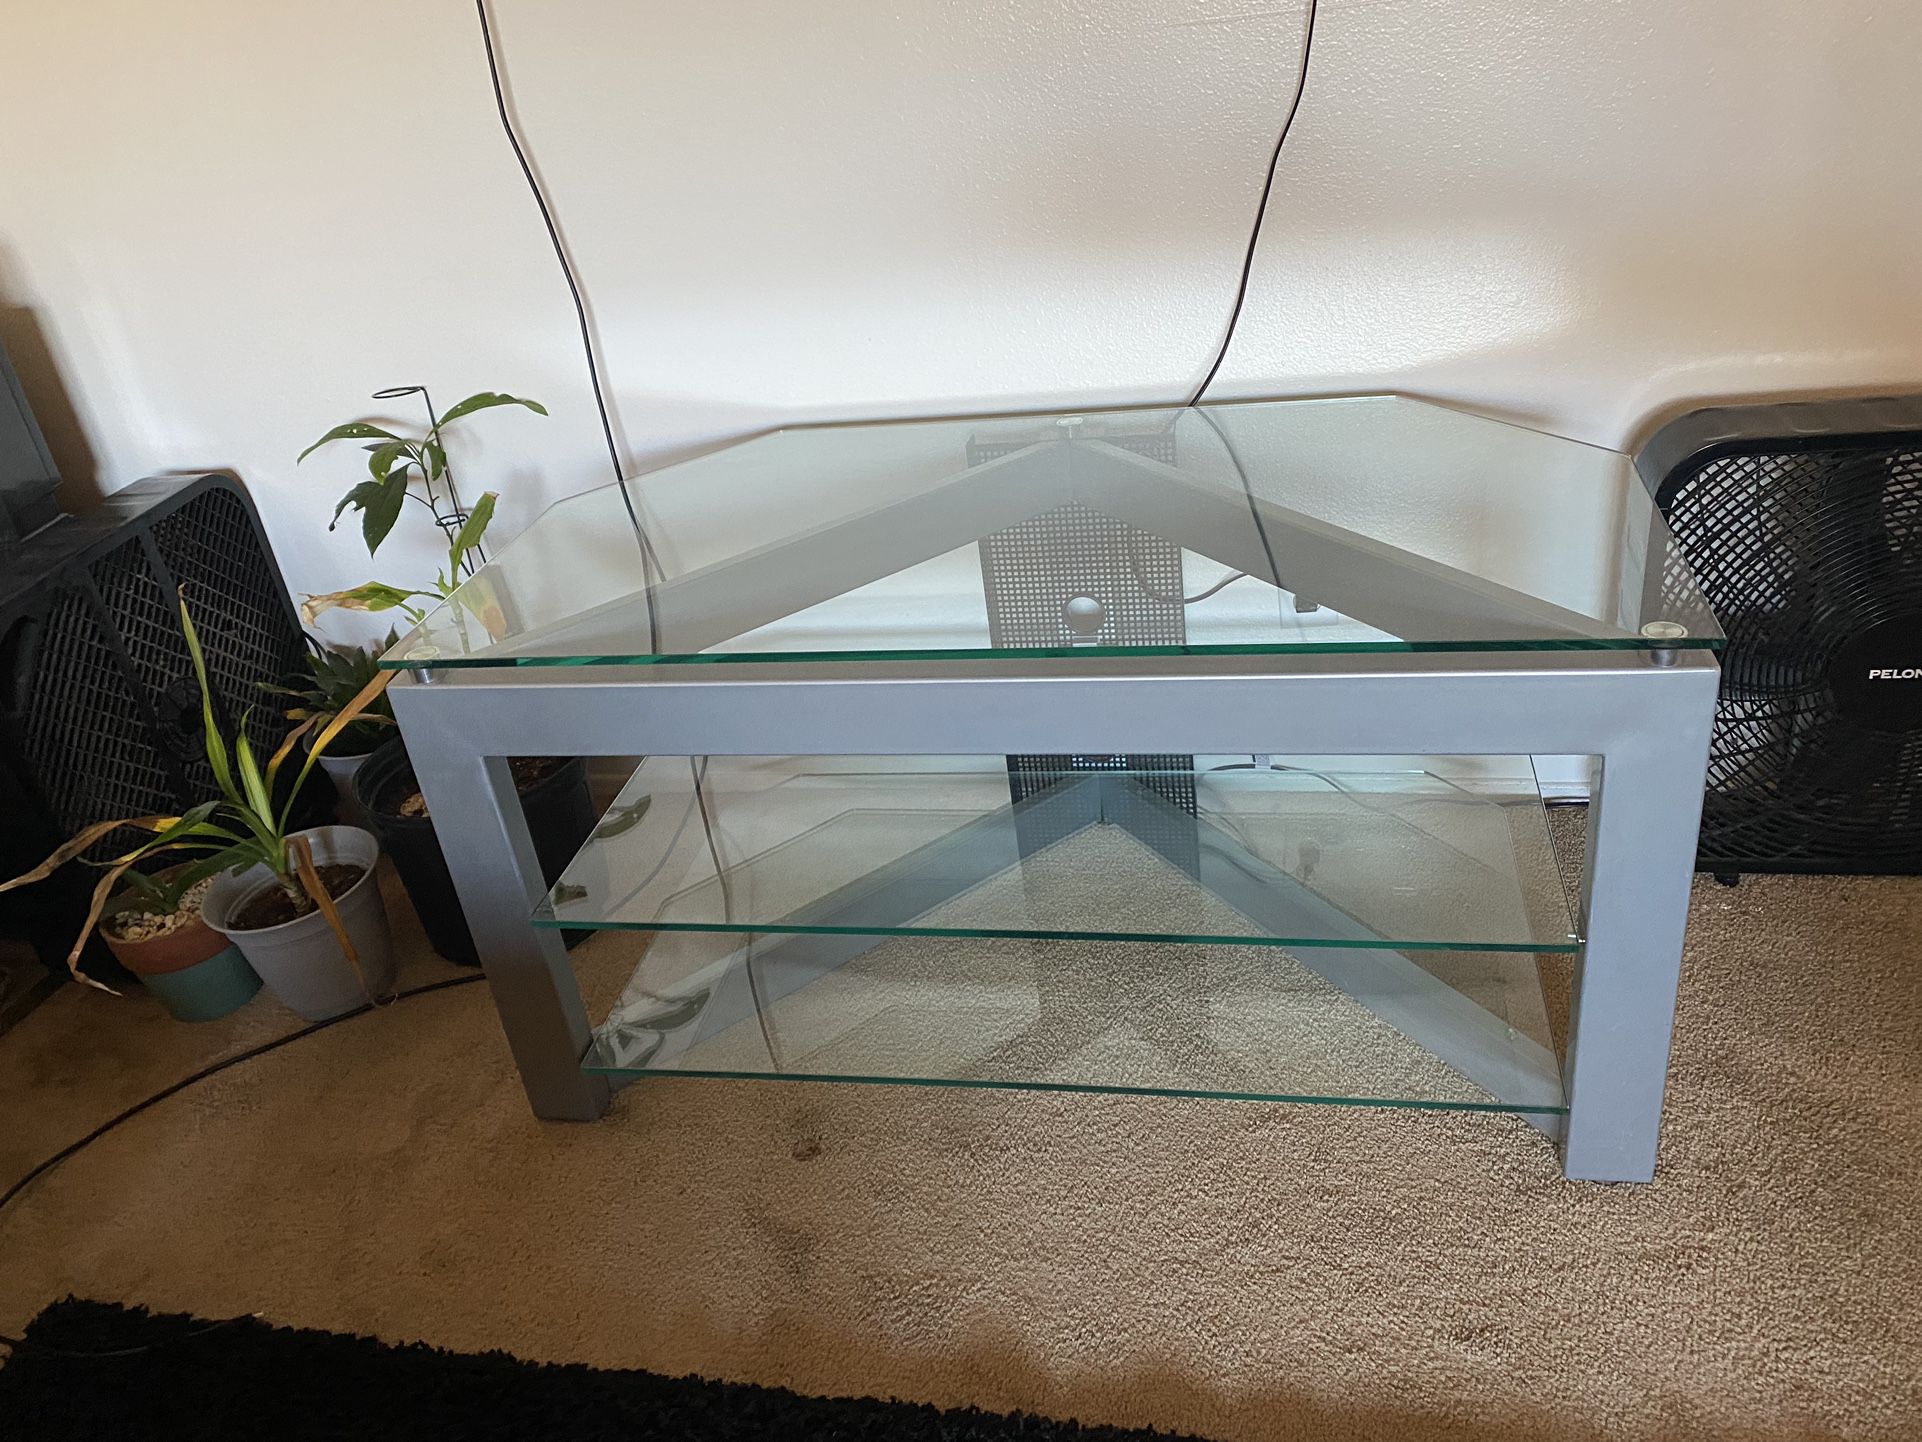 Glass TV Stand